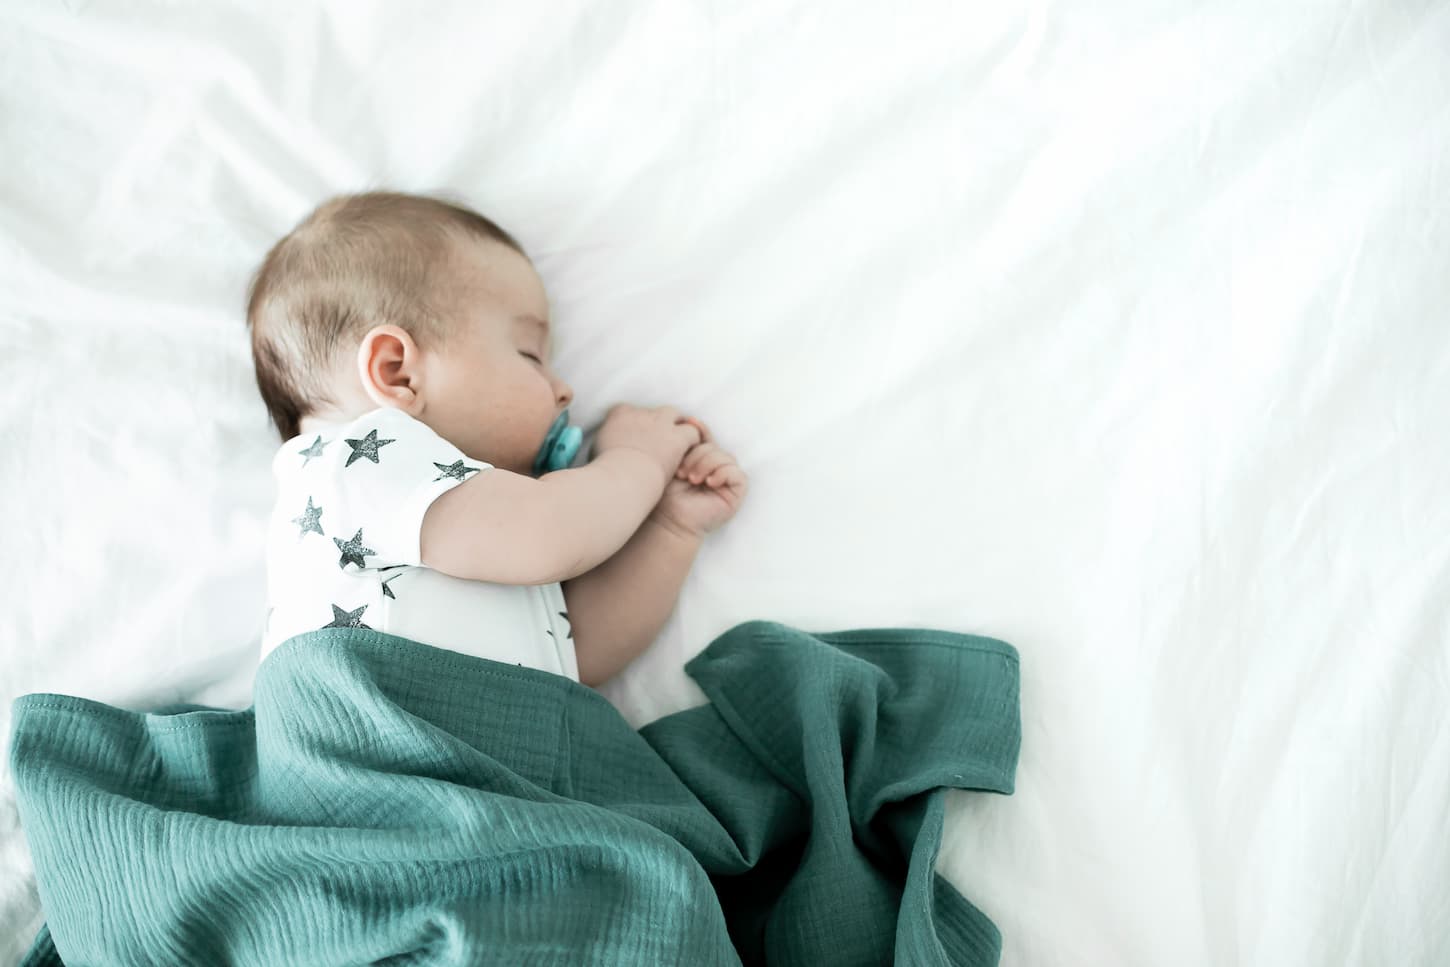 Does The Mattress Affect a Baby’s Sleep?